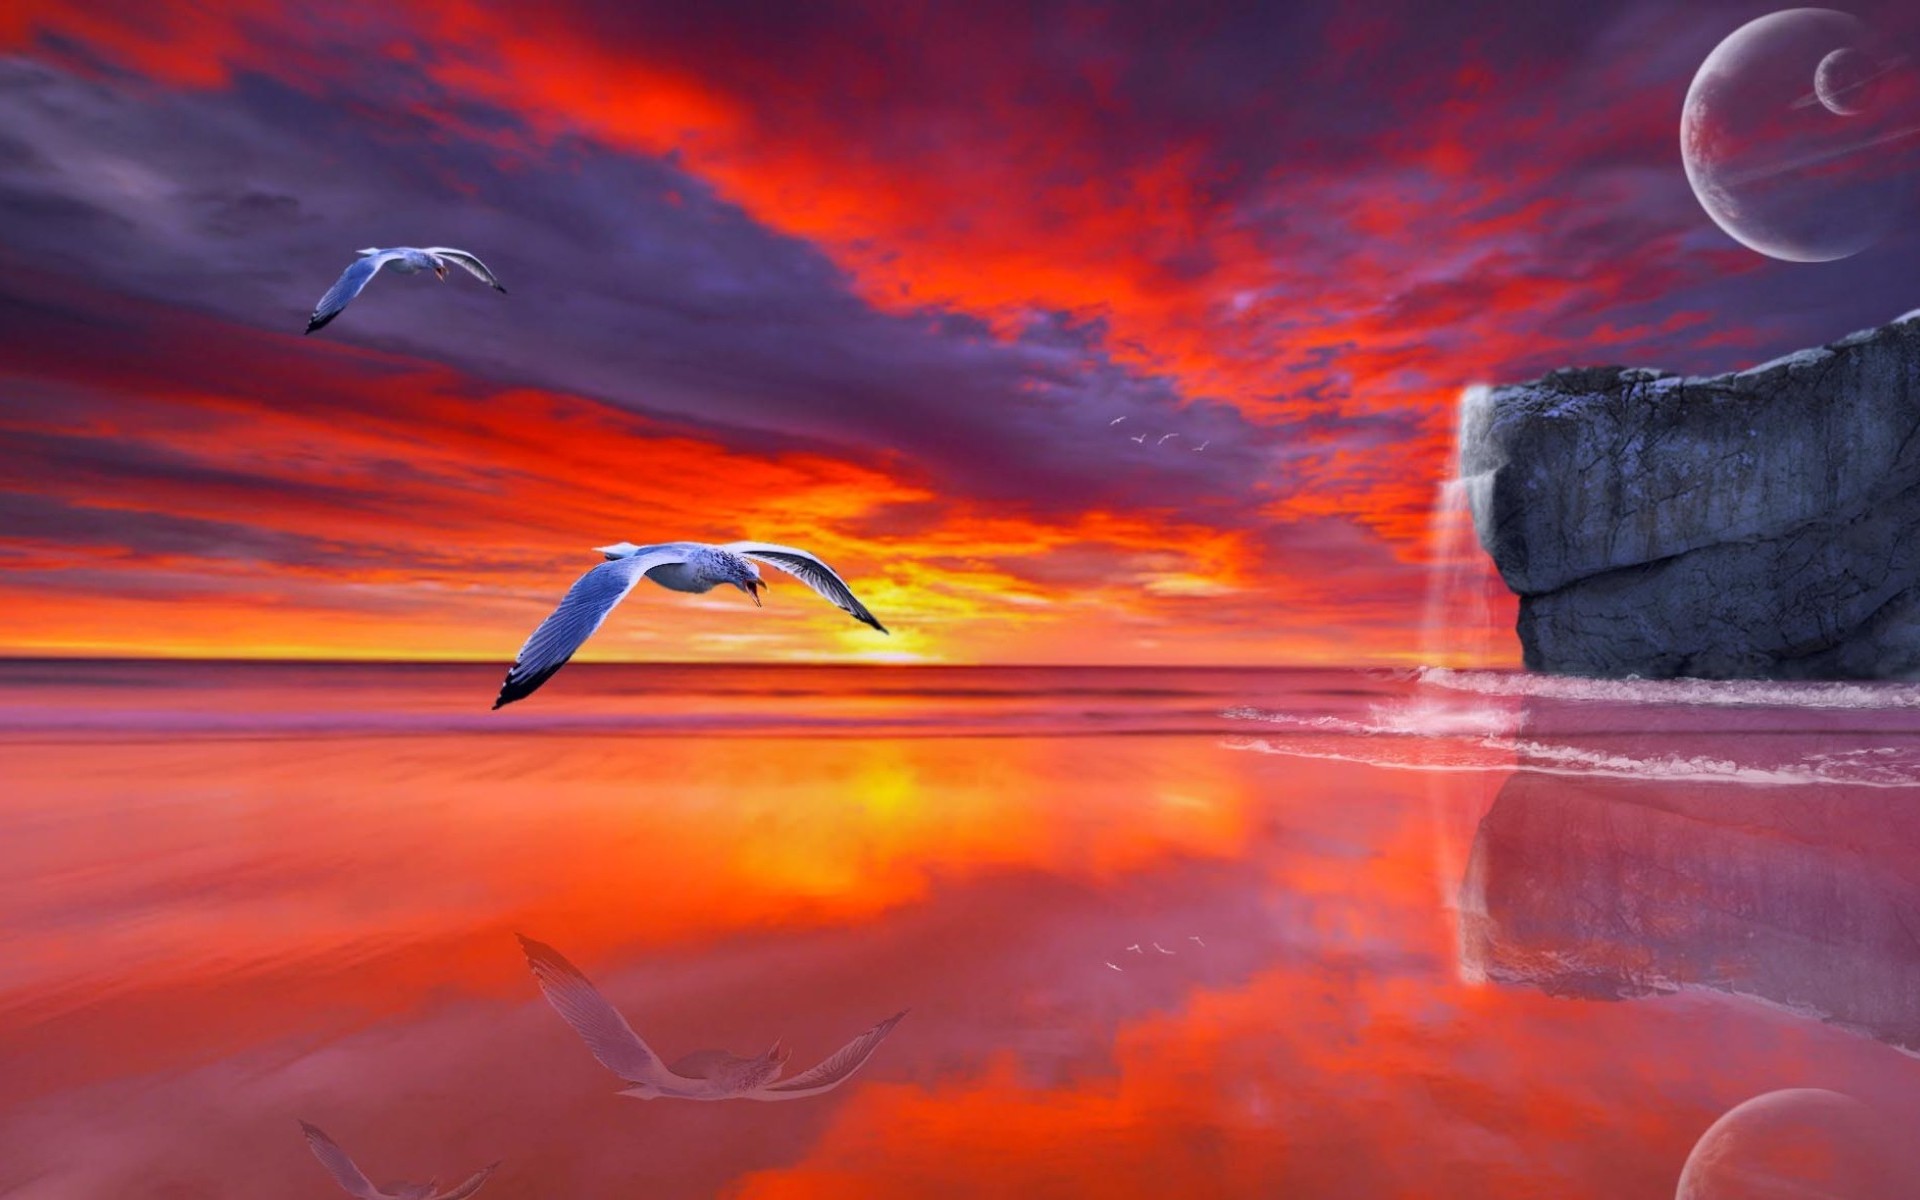 reflection, photography, manipulation, flight, seagull, sunset